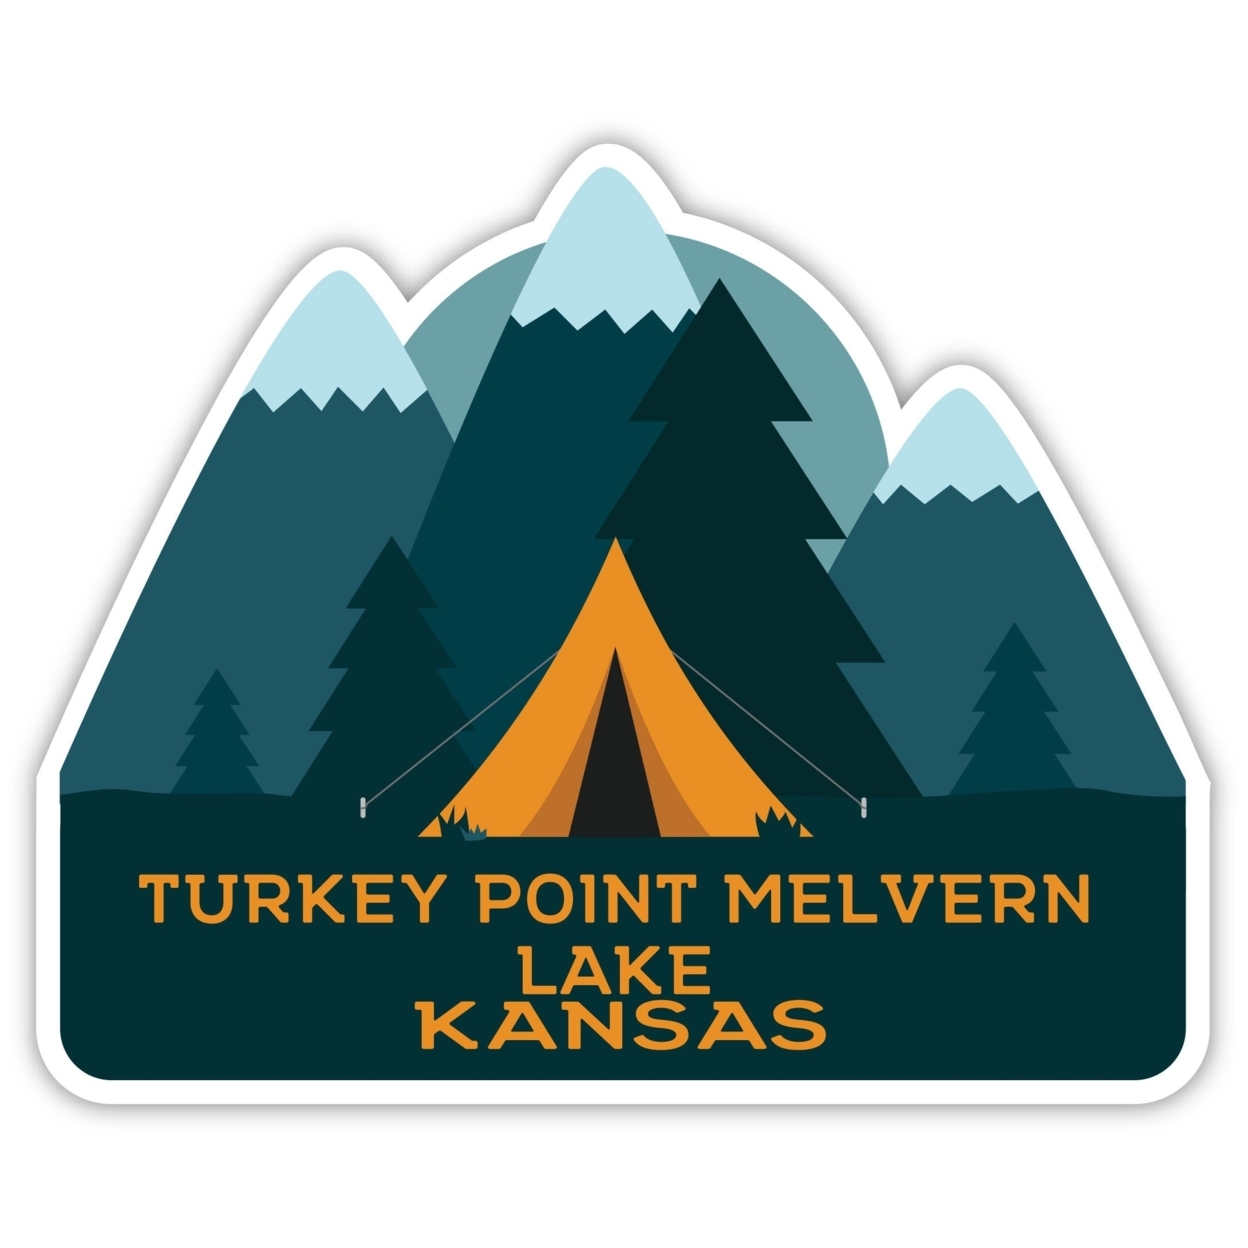 Turkey Point Melvern Lake Kansas Souvenir Decorative Stickers (Choose Theme And Size) - Single Unit, 2-Inch, Tent